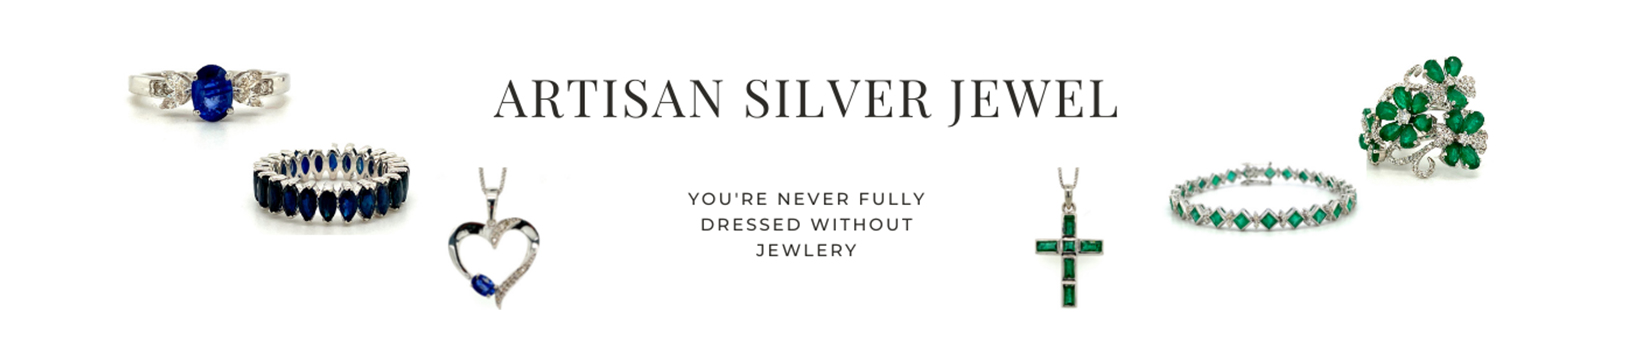 Artisan Silver Jewel